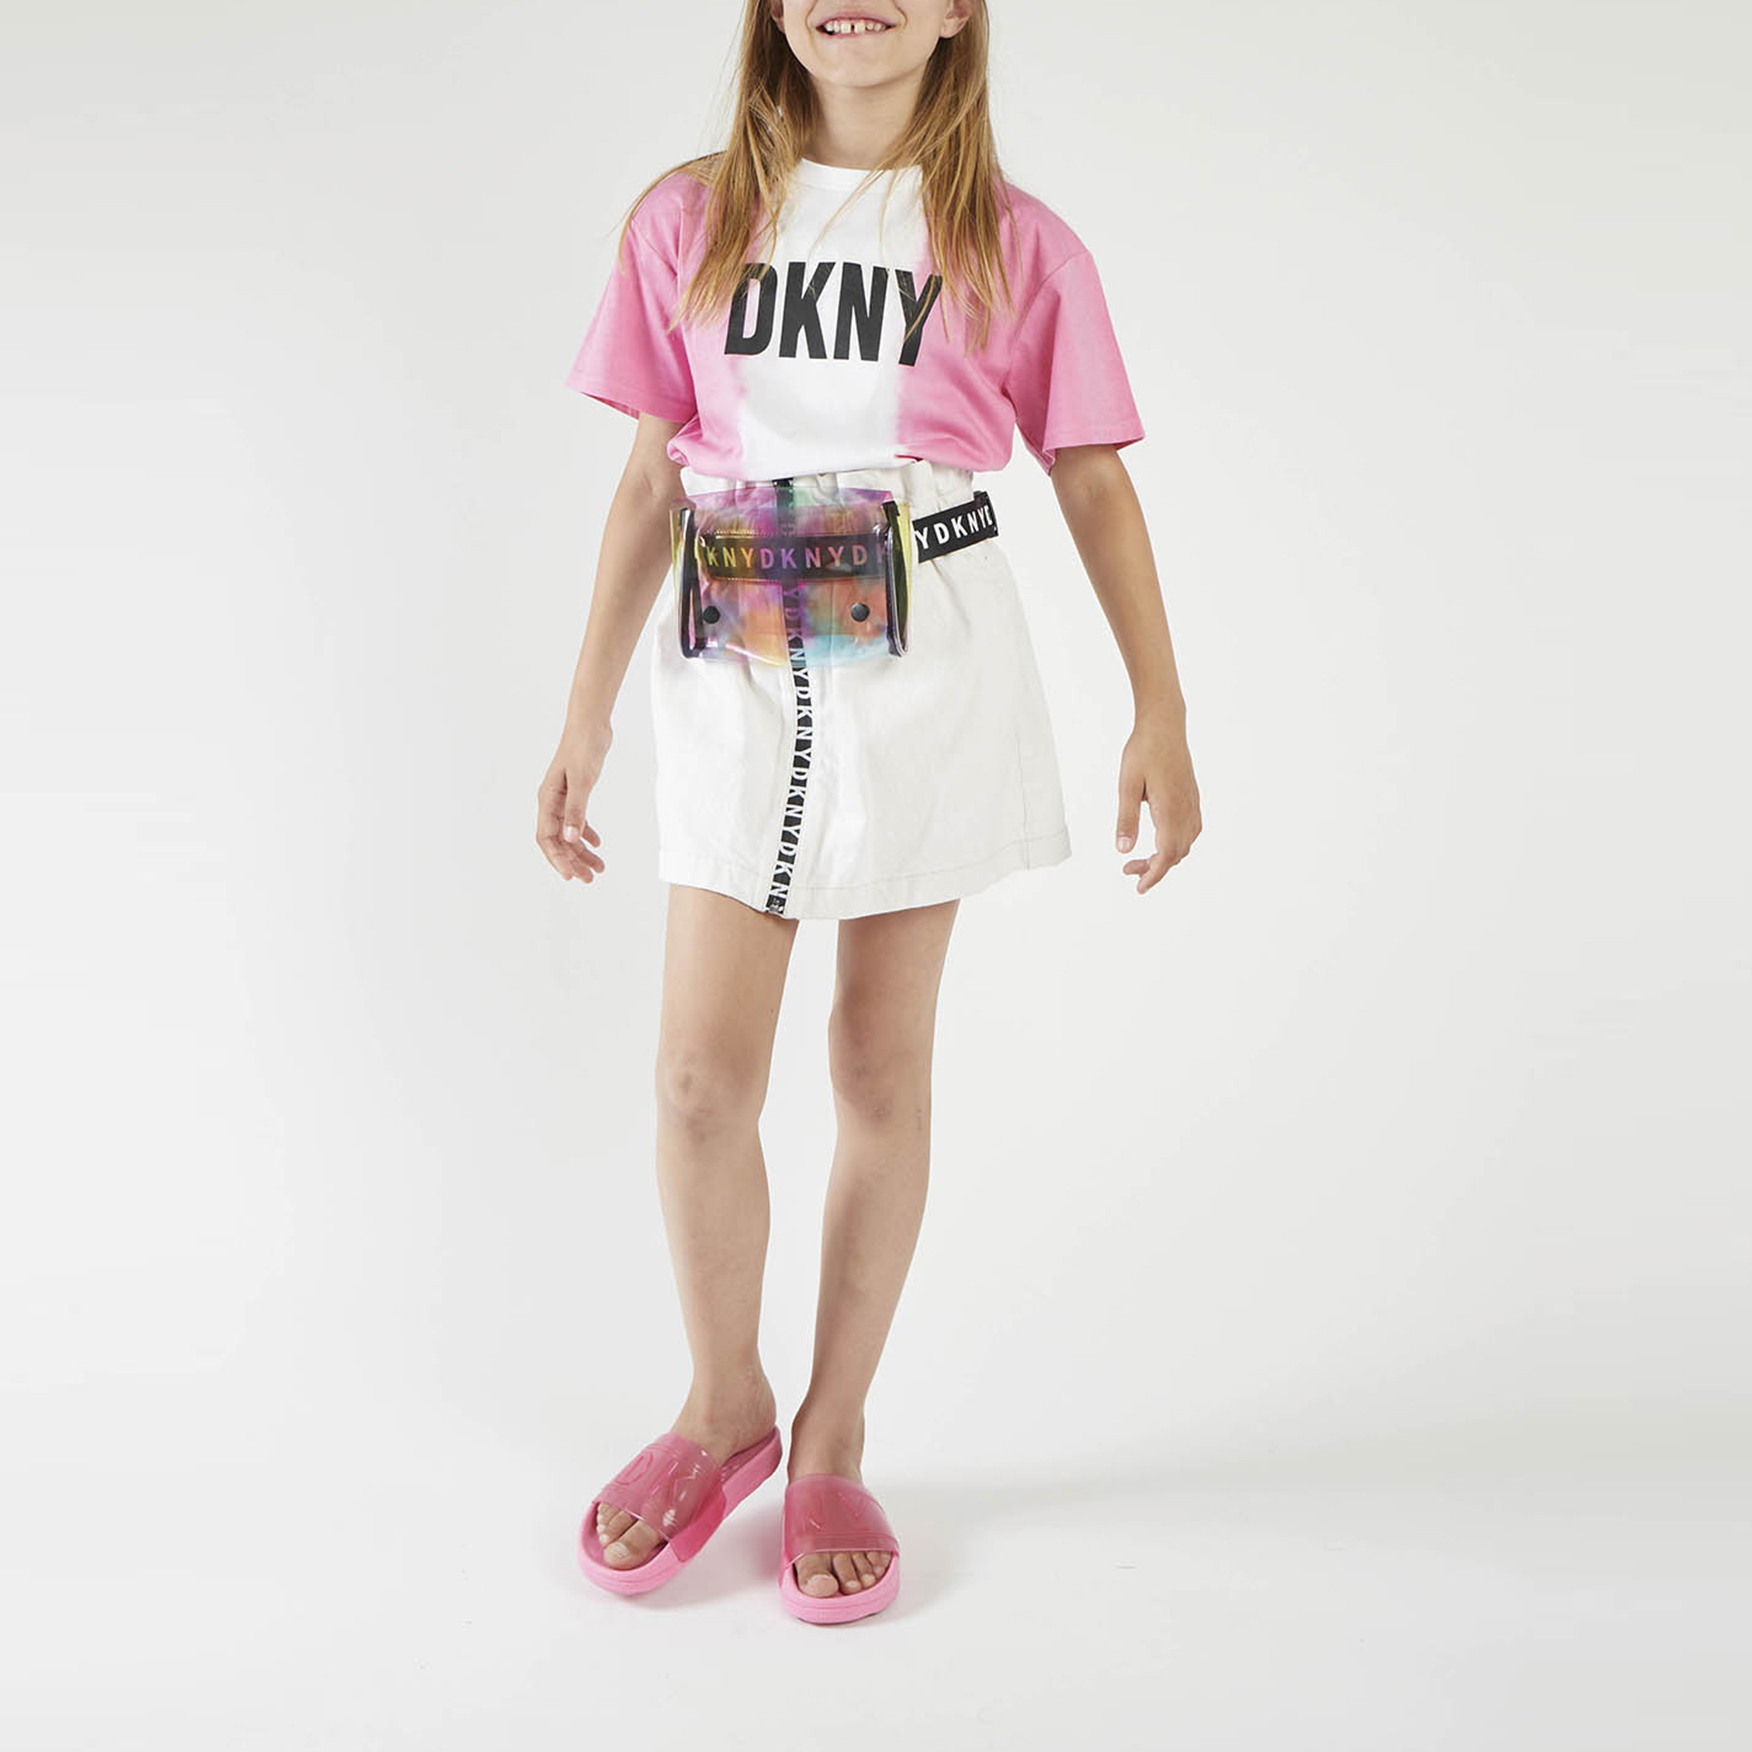 Borsetta da cintura in PVC DKNY Per BAMBINA